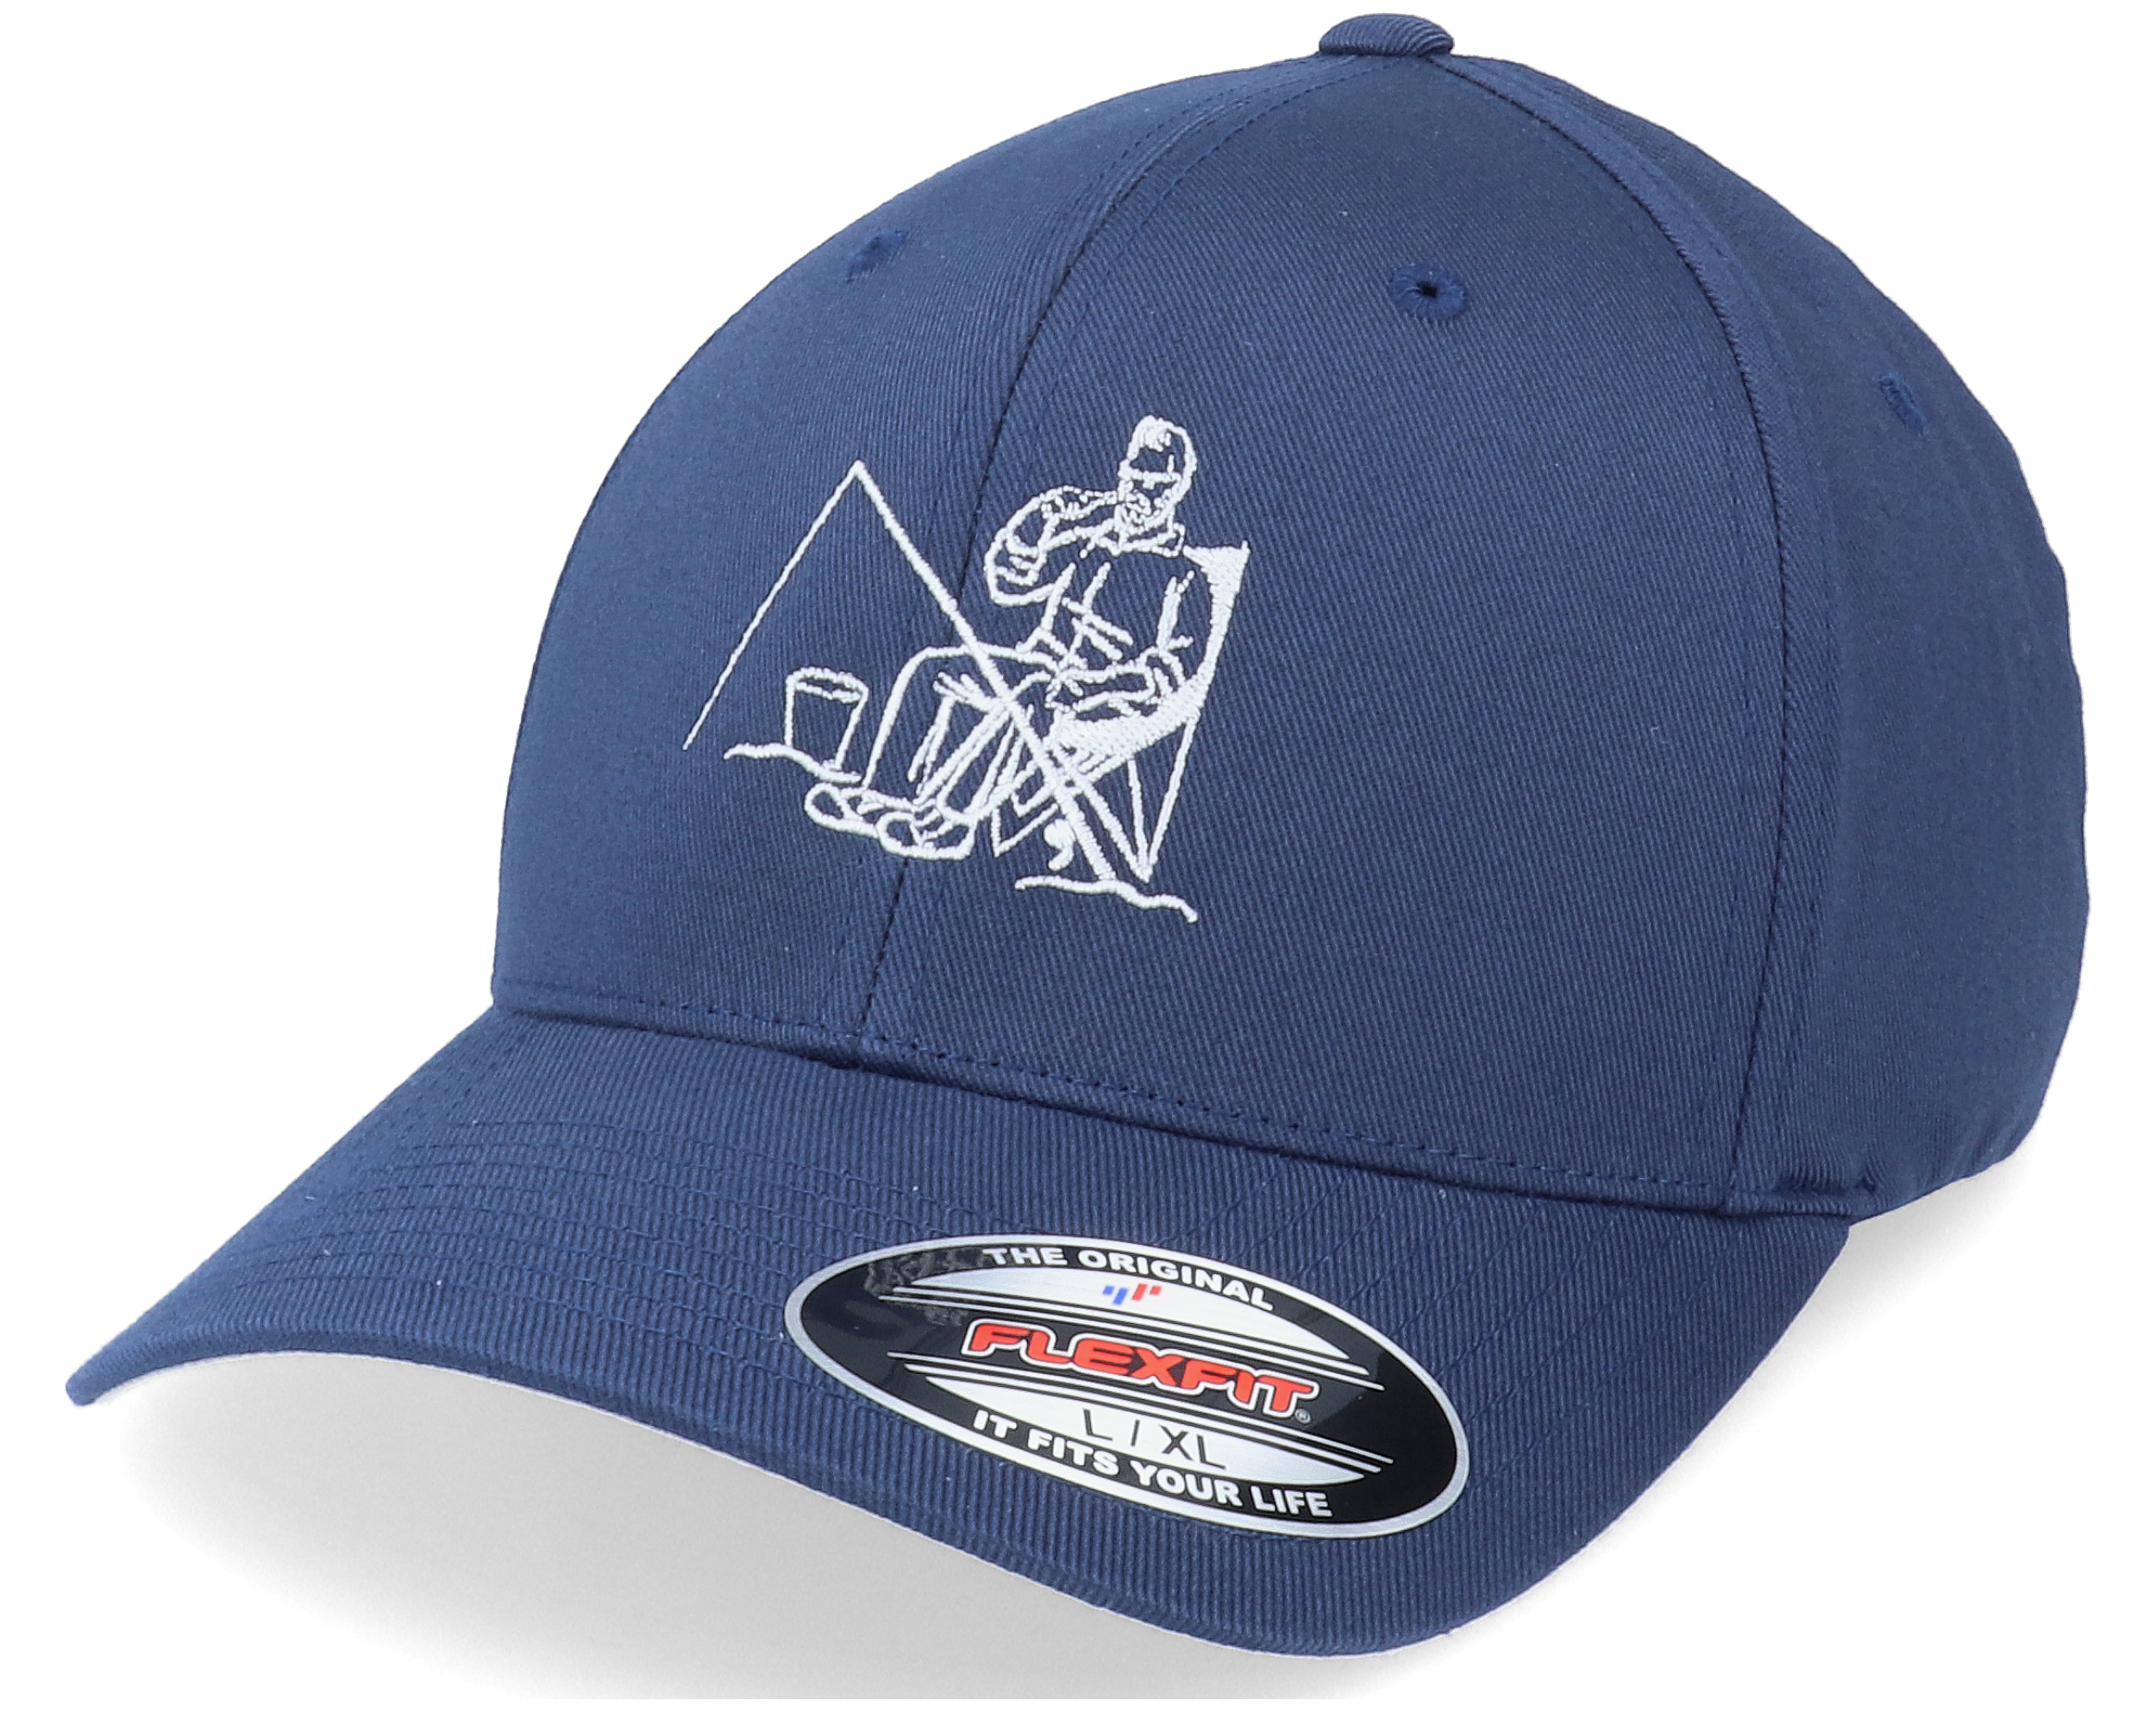 Skillfish - Blue flexfit Cap - Beer Fishing Navy Flexfit @ Hatstore